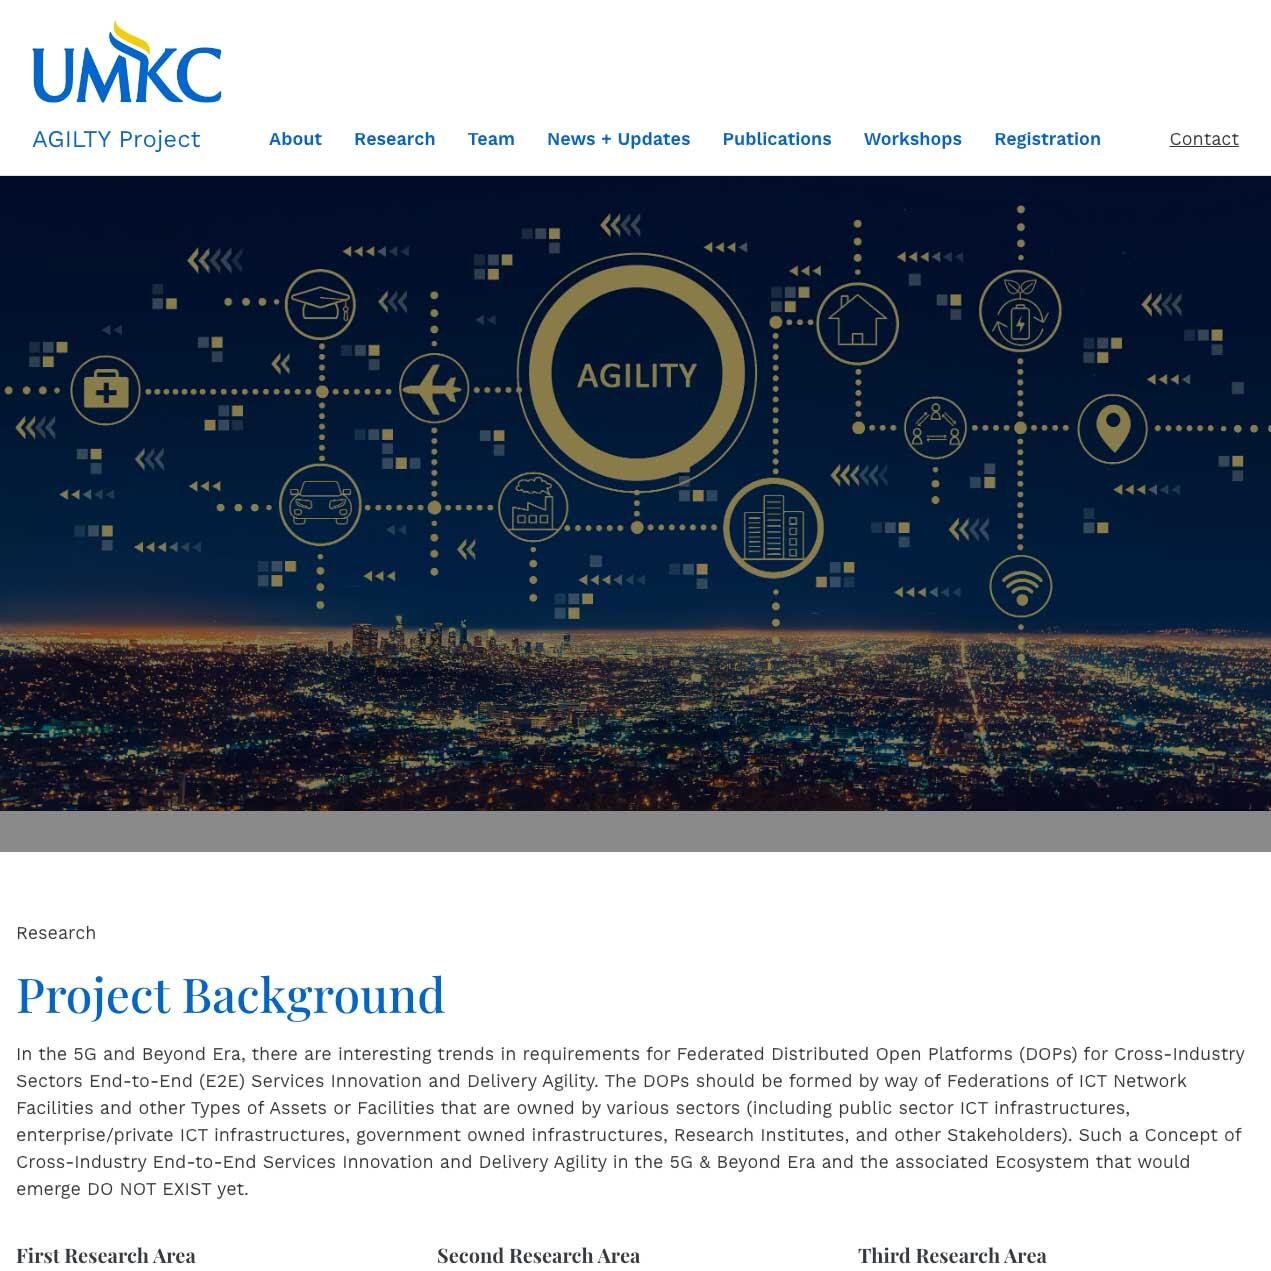 Agility Project at UMKC website